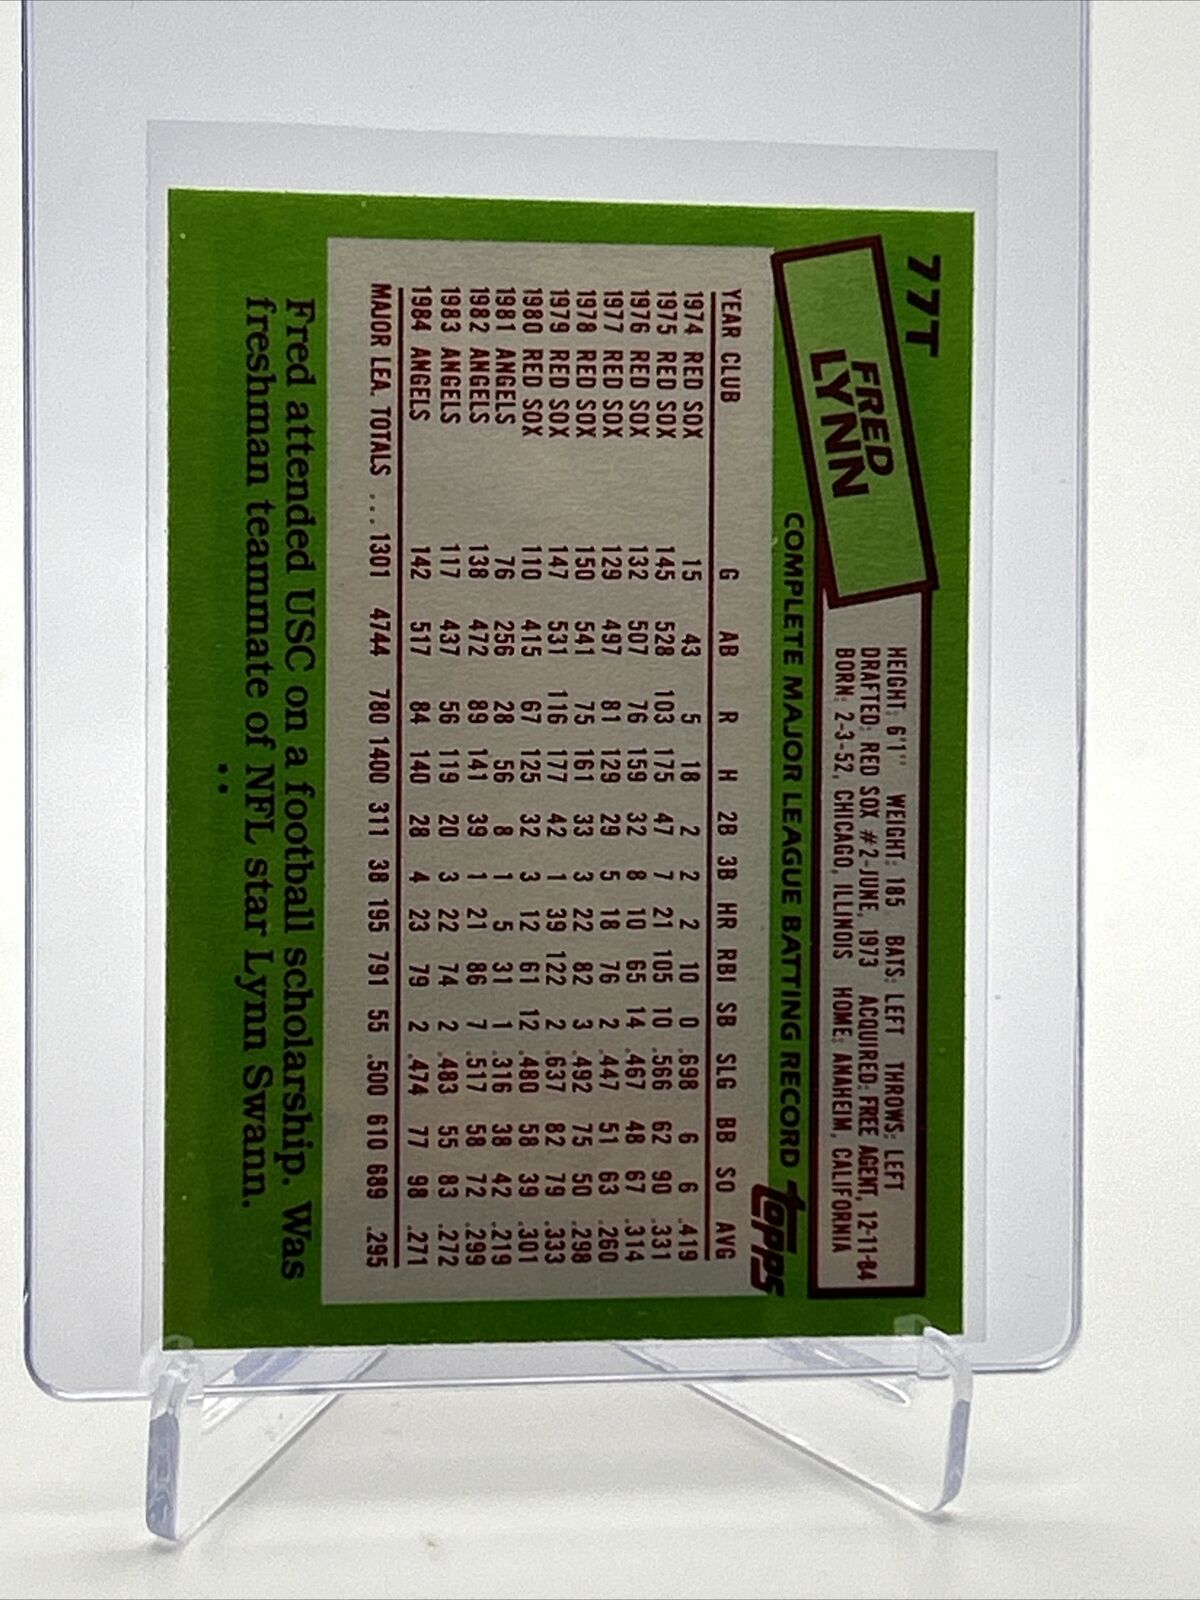 1985 Topps Traded Fred Lynn Baseball Card #77T NM-MT FREE SHIPPING